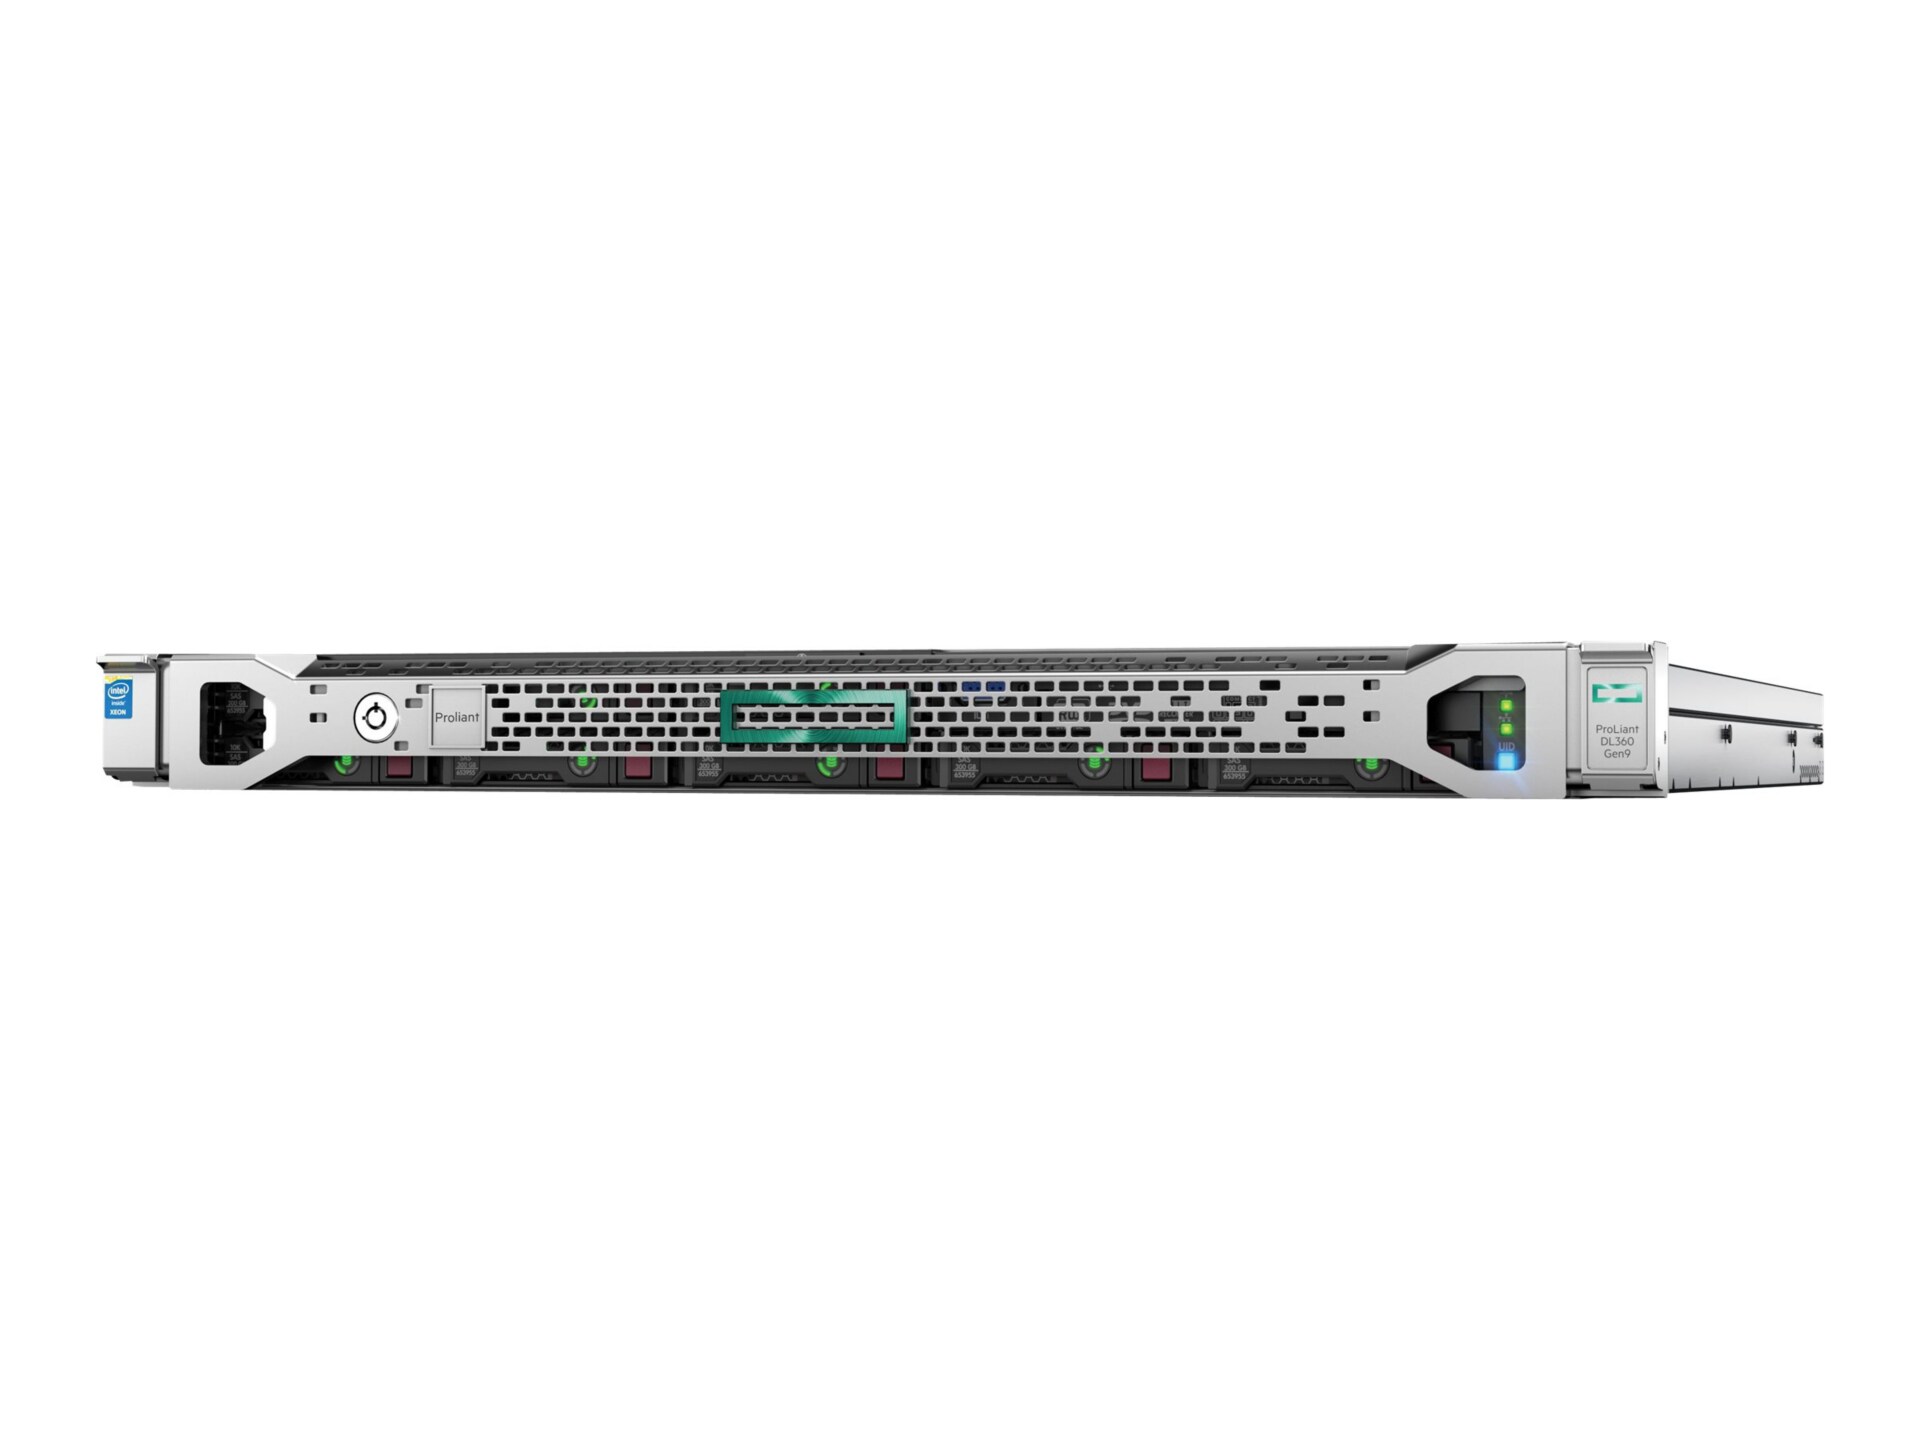 HPE ProLiant DL360 Gen9 - rack-mountable - Xeon E5-2643V4 3.4 GHz - 32 GB